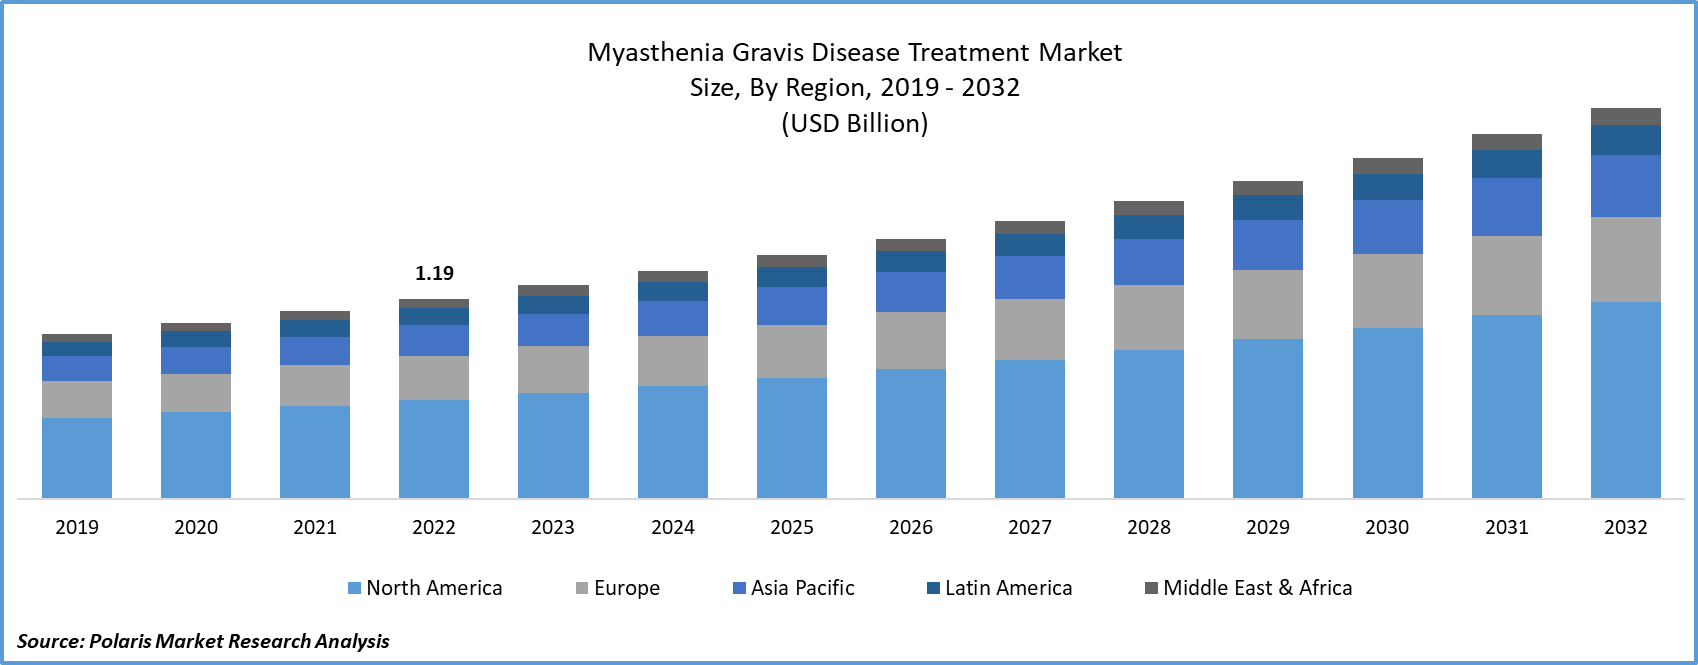 Myasthenia Gravis Disease Treatment Market Size